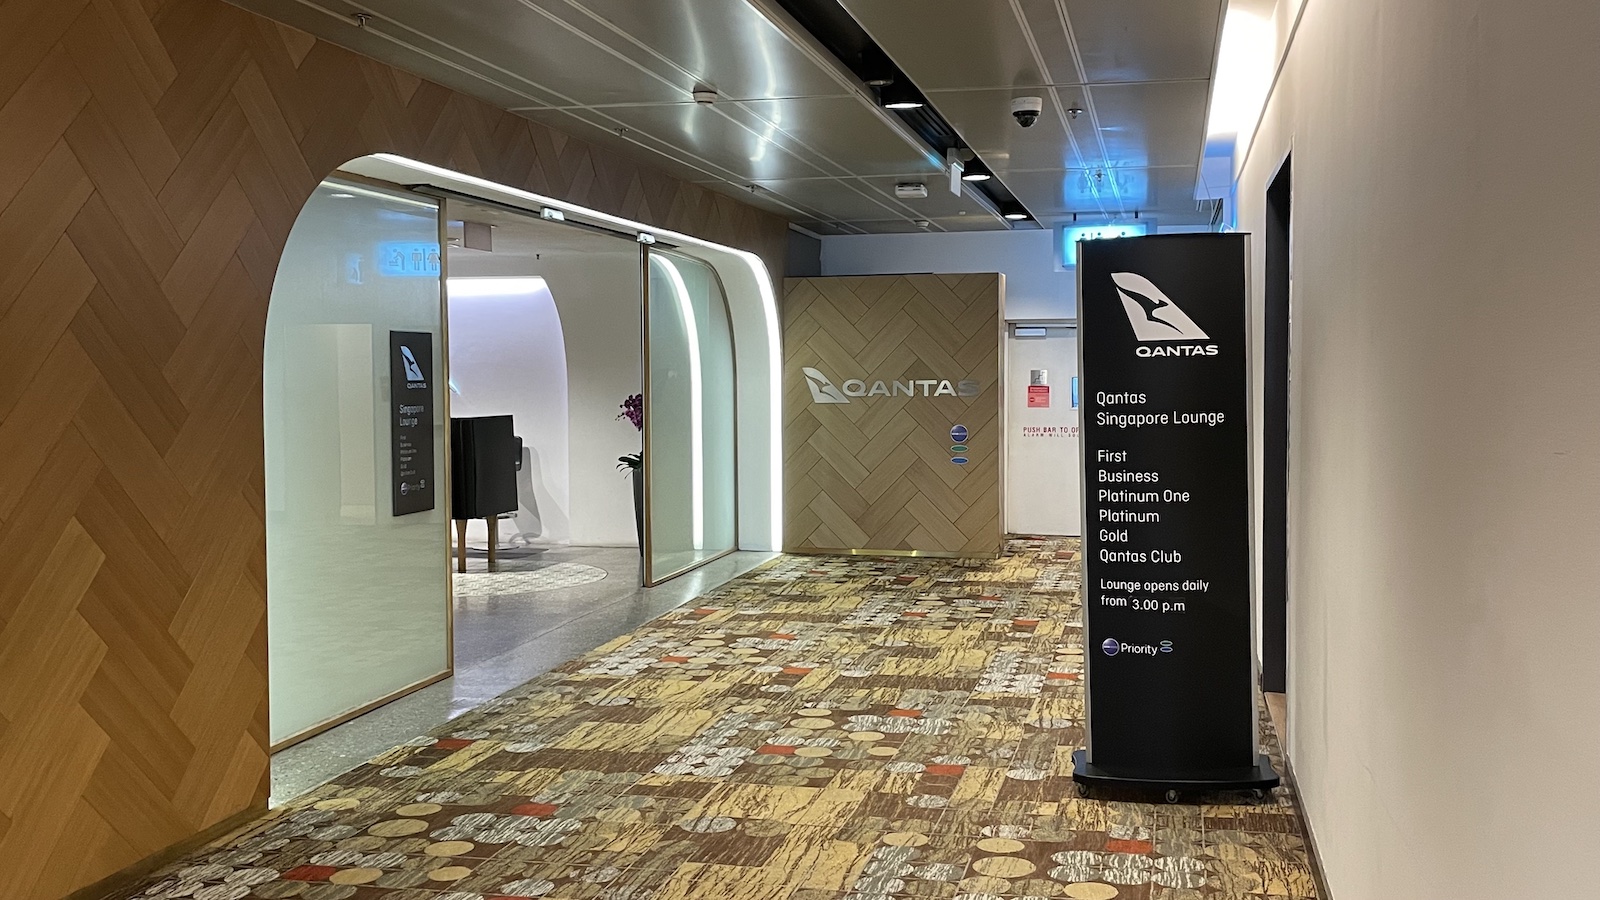 Qantas Business Class Lounge at Changi Airport